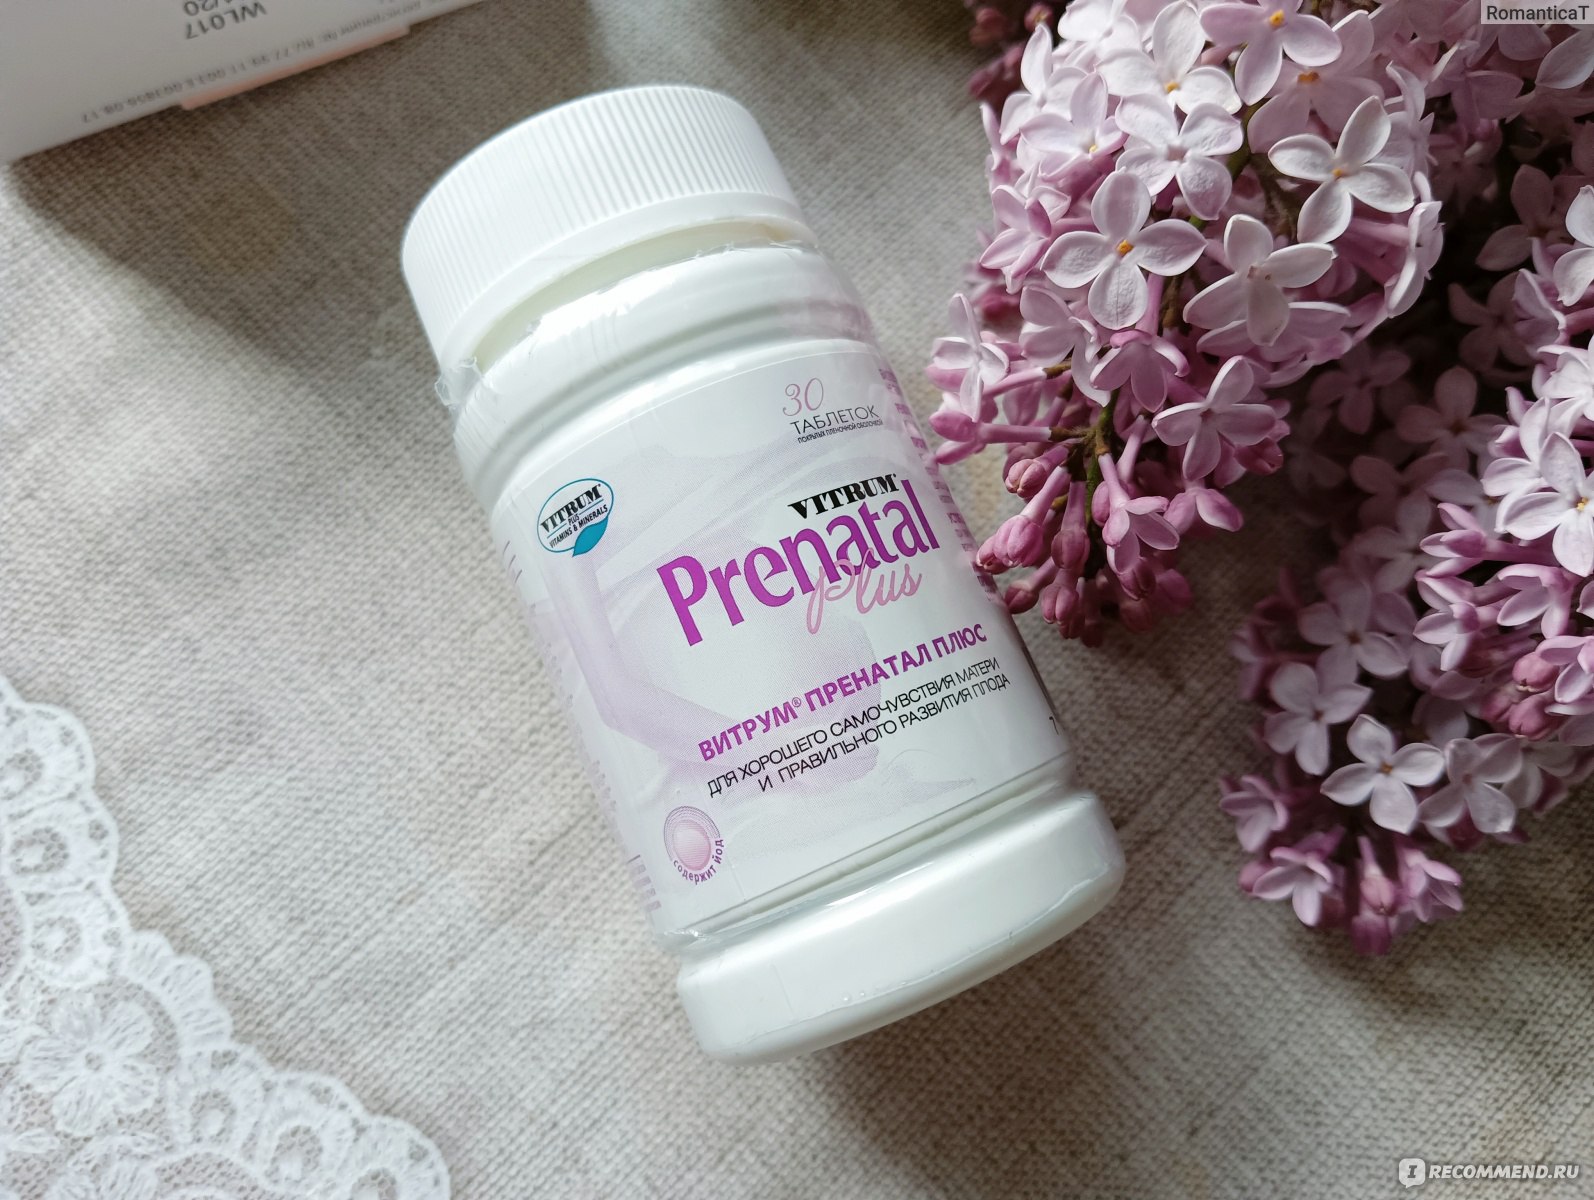 Витамины Unipharm Витрум Пренатал Плюс (Prenatal Plus) для беременных и .